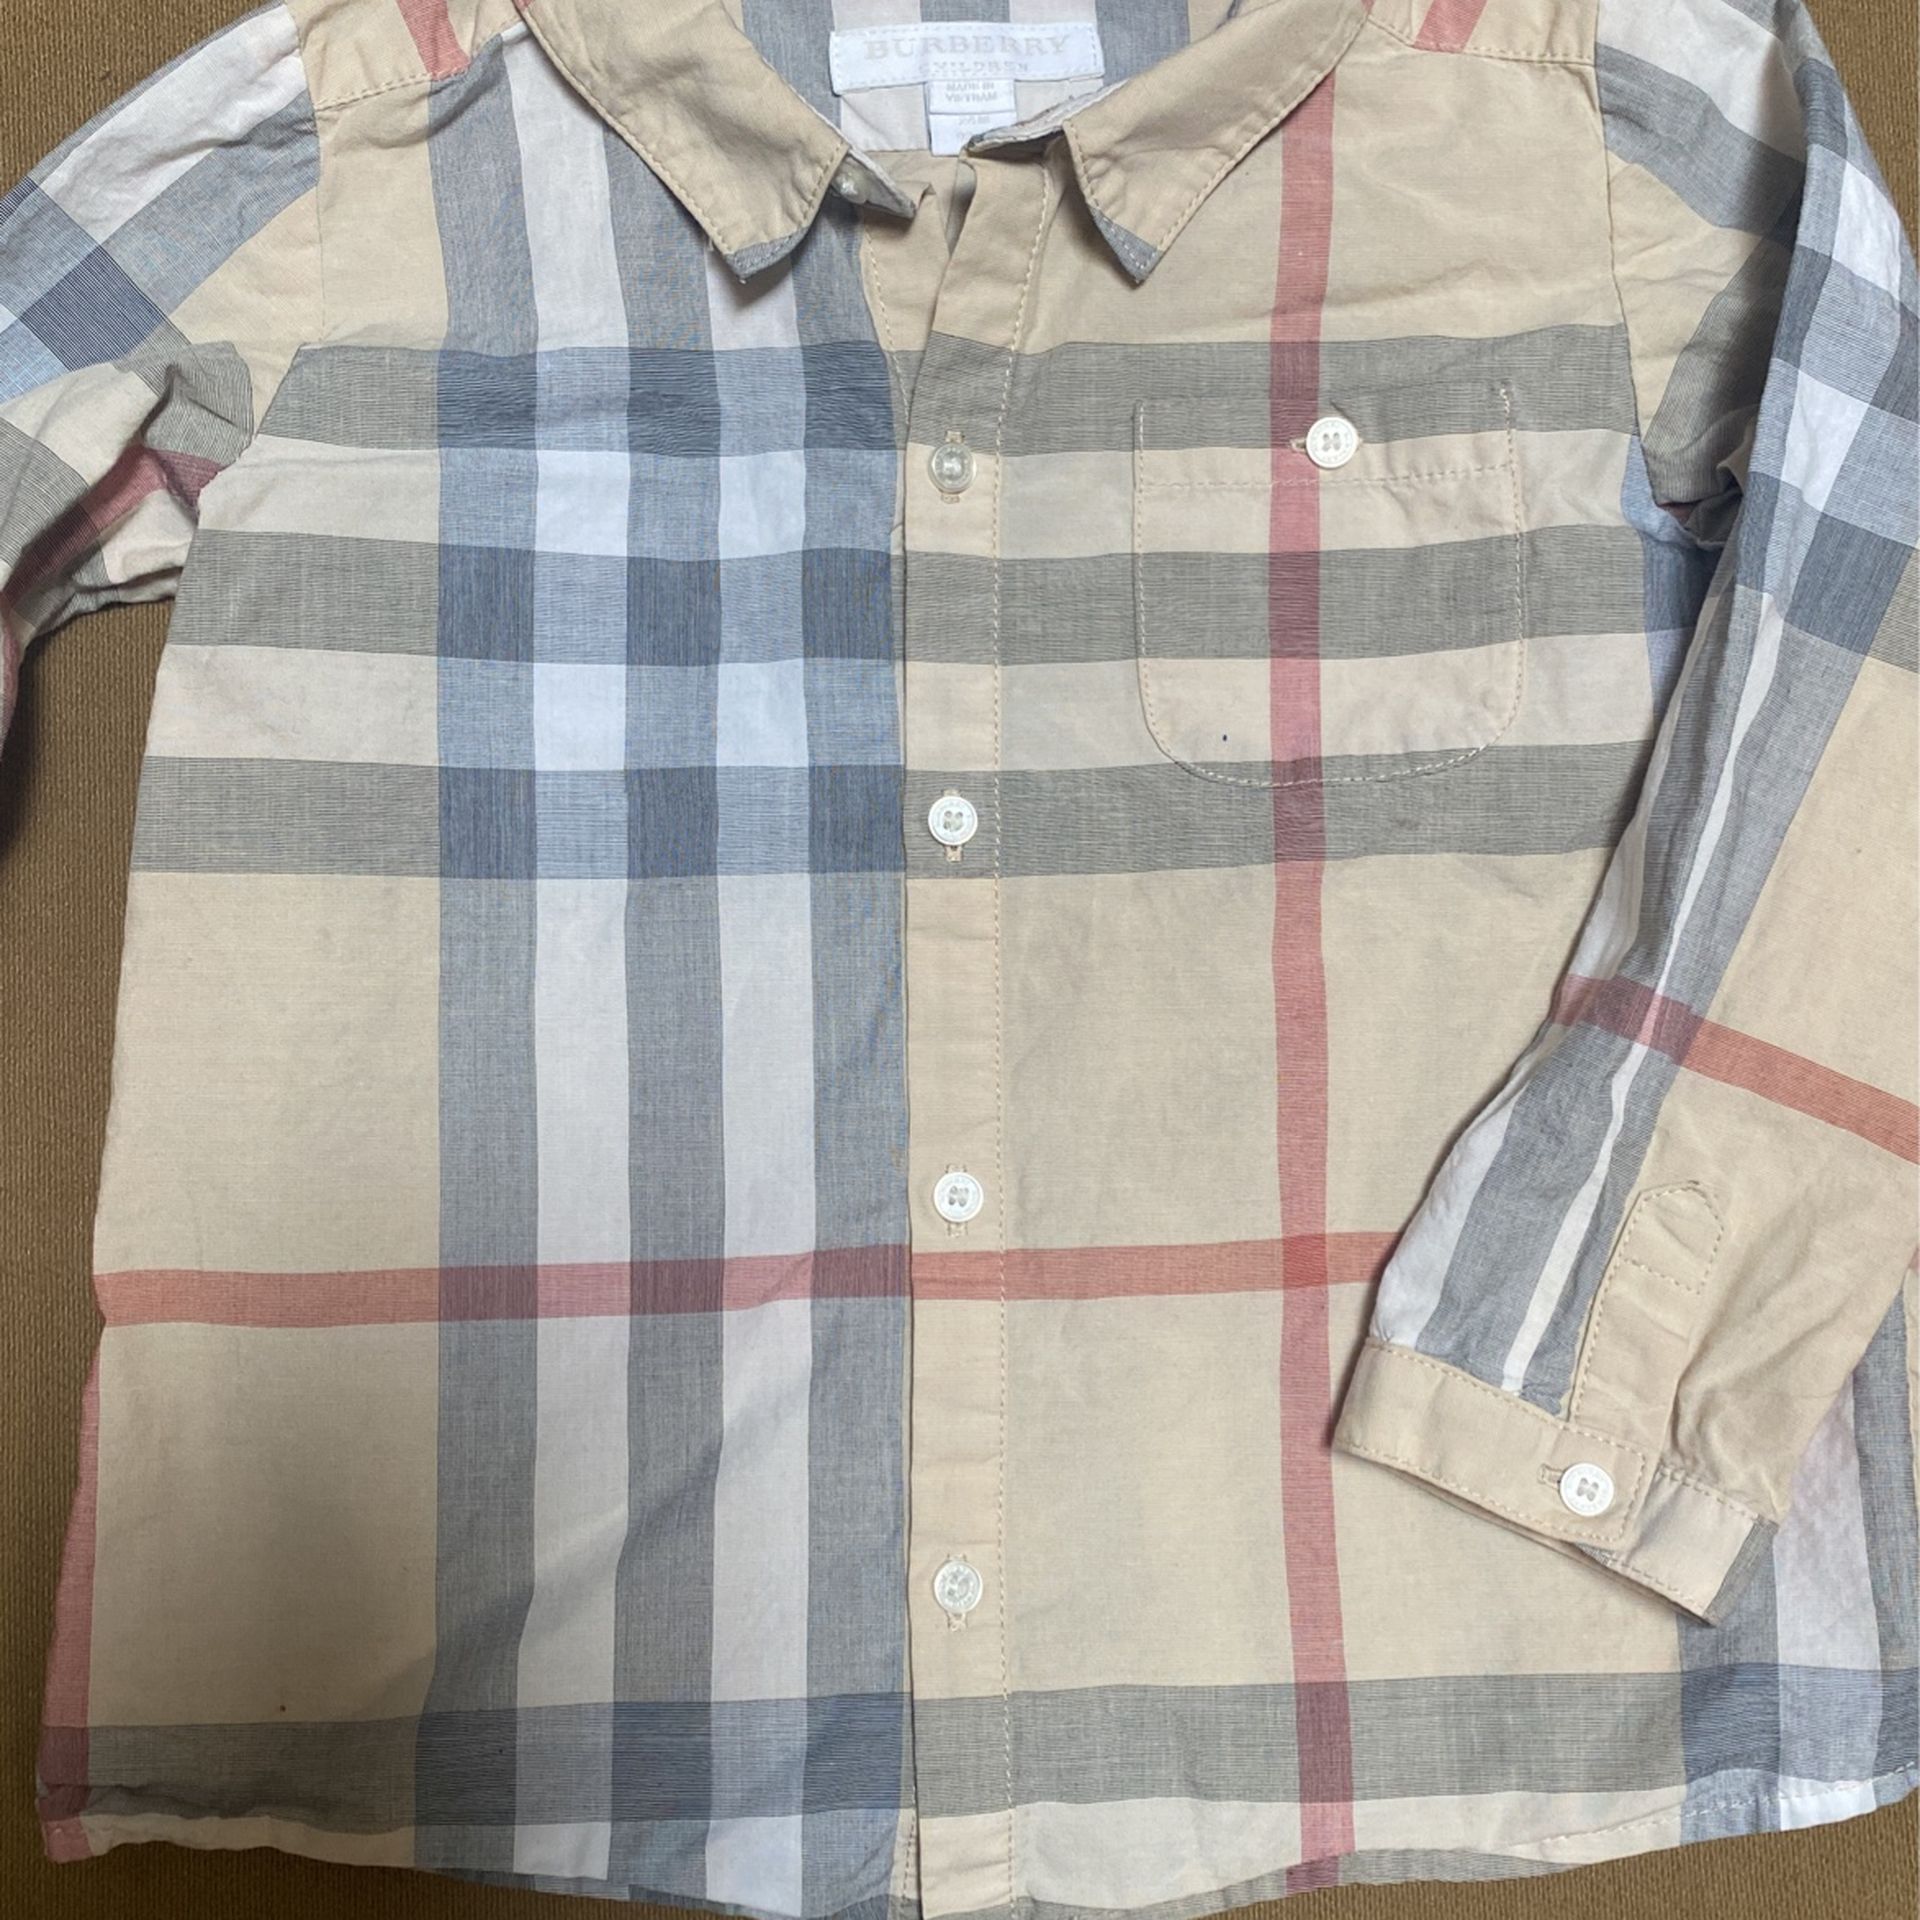 Burberry Boys Dress Shirt Plaid 24 Months 24m